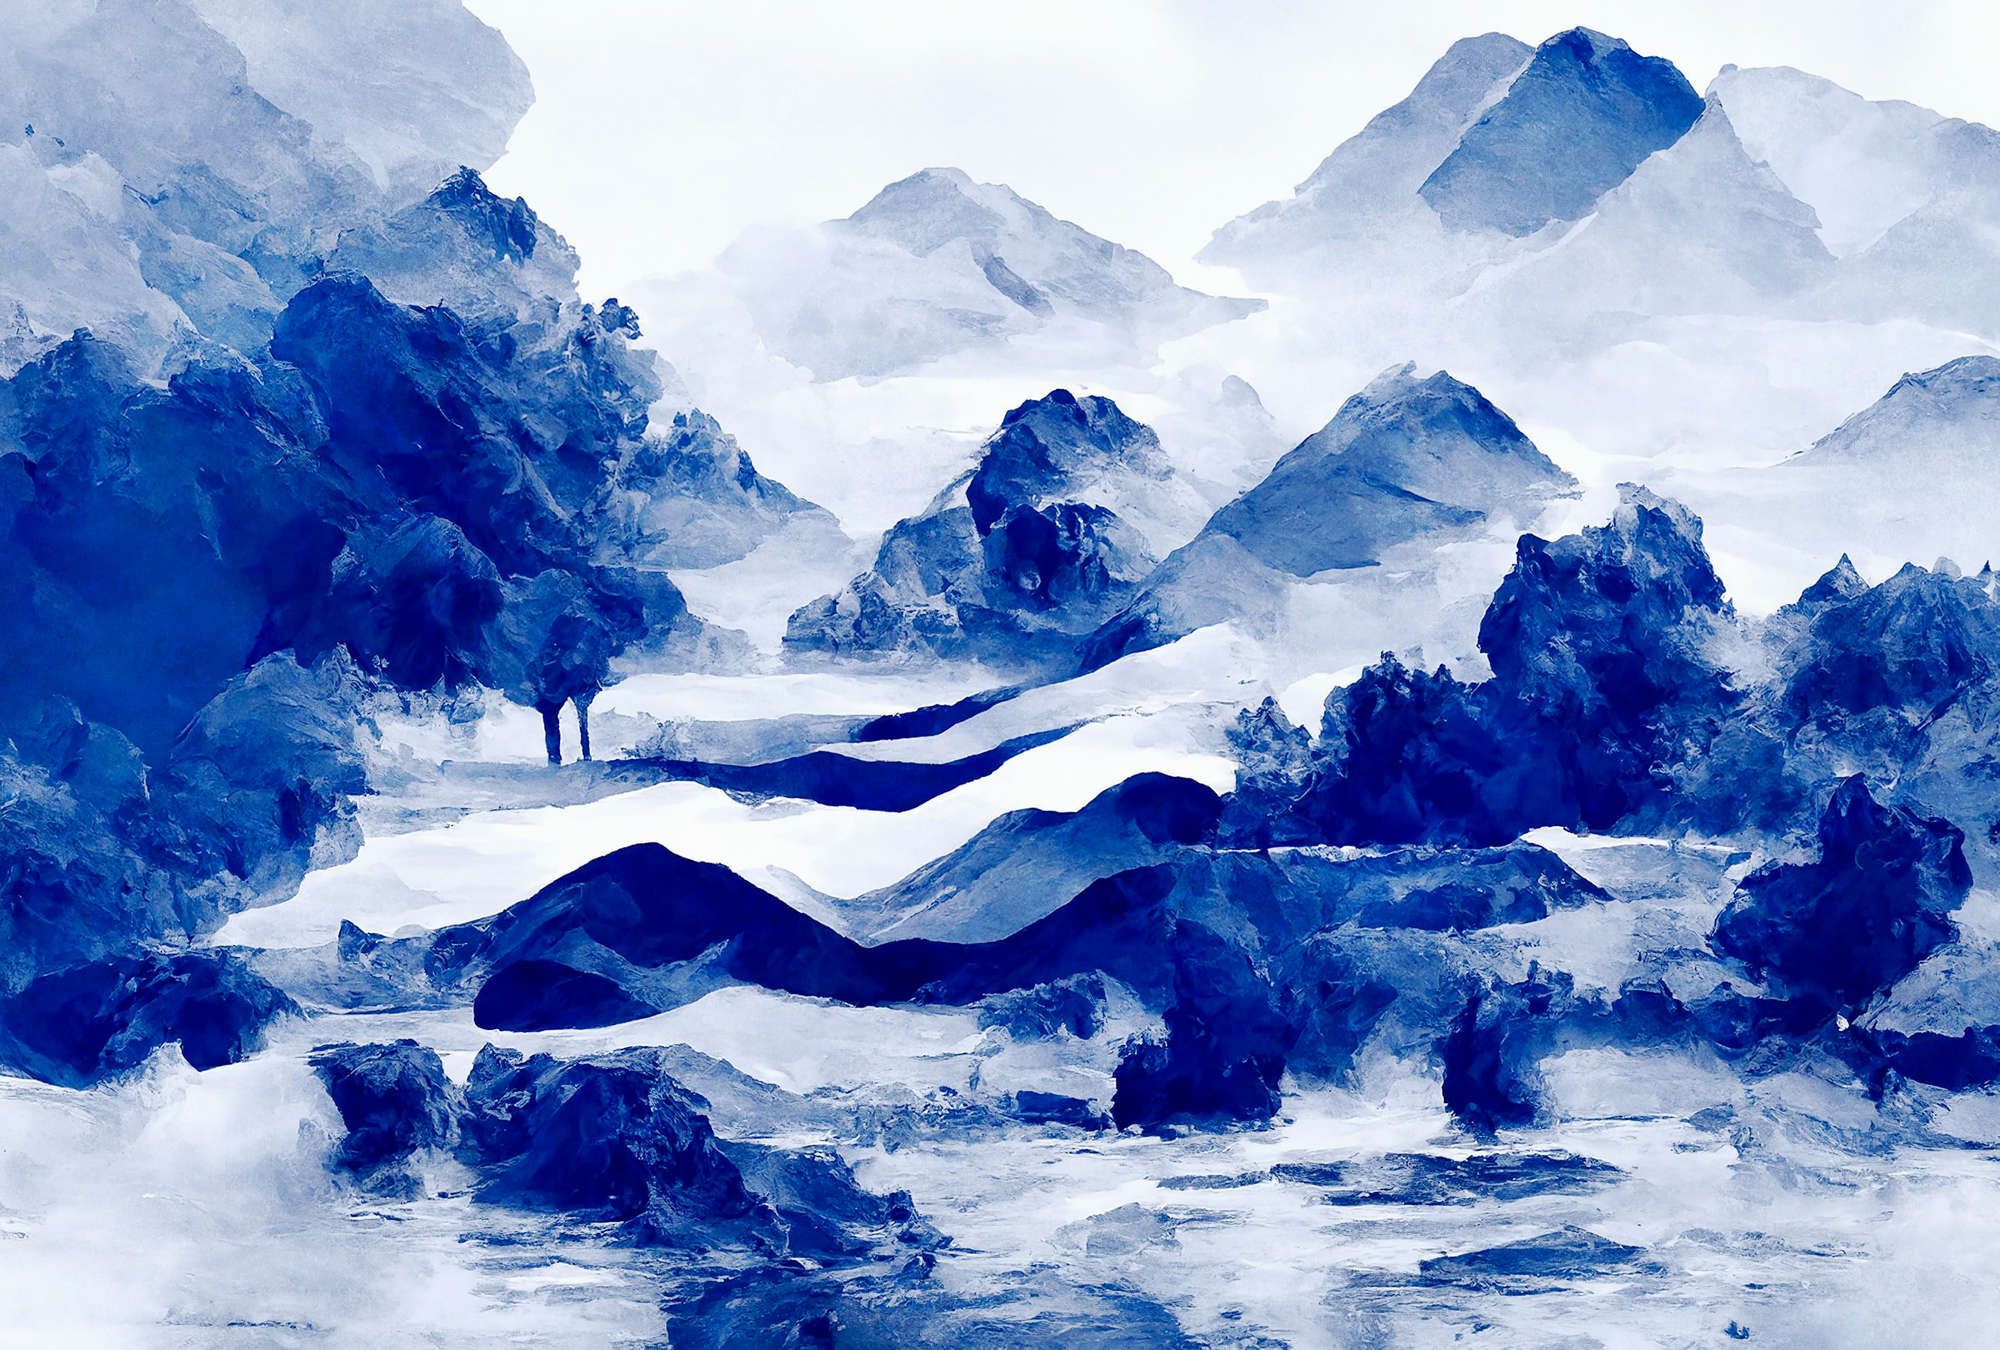             Fotomural »tinterra 3« - Paisaje con montañas y niebla - Azul | Mate, Tela no tejida lisa
        